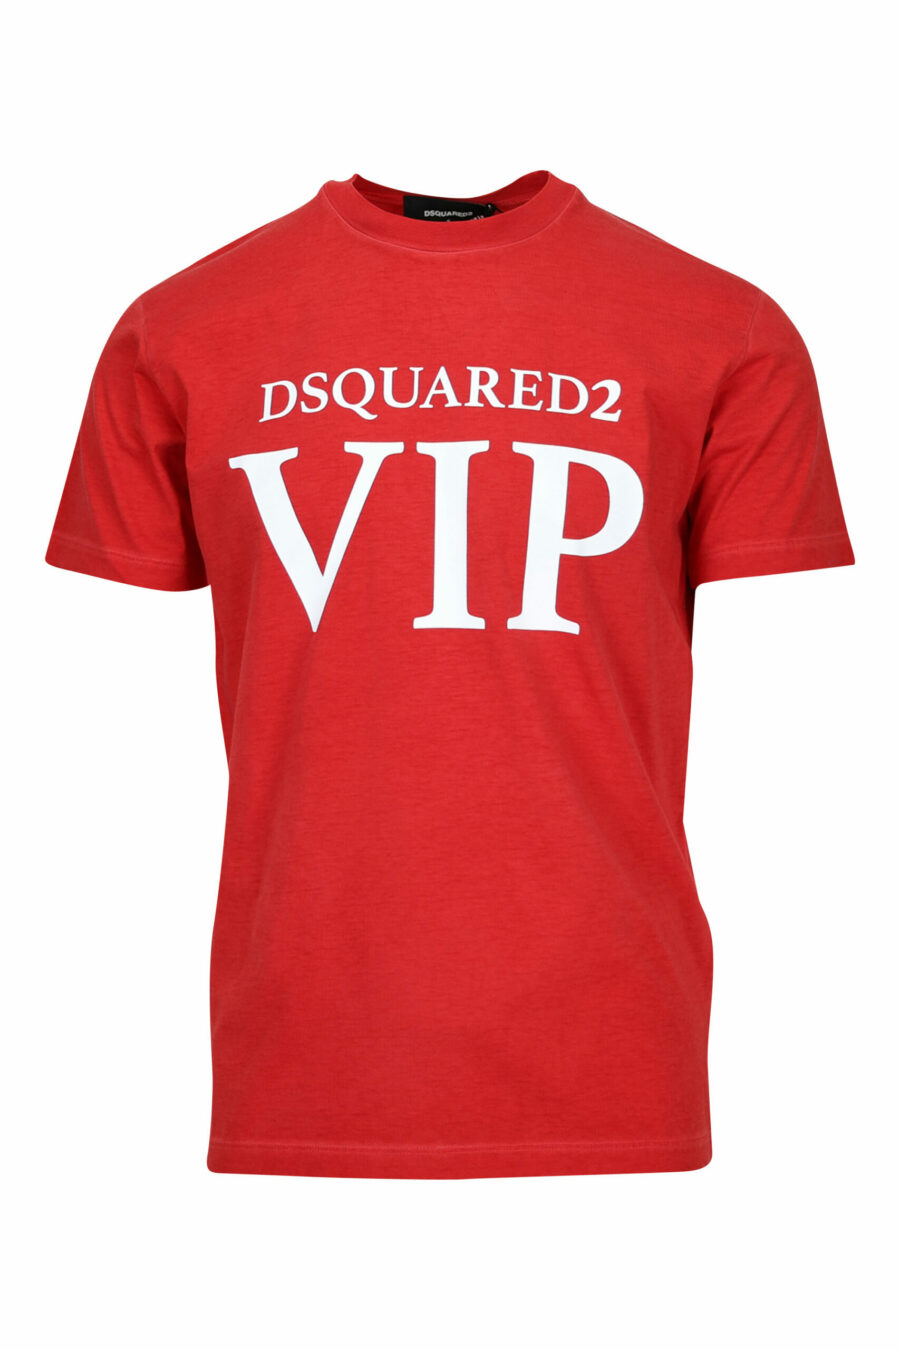 Camiseta roja con maxilogo "vip" - 8054148578923 scaled